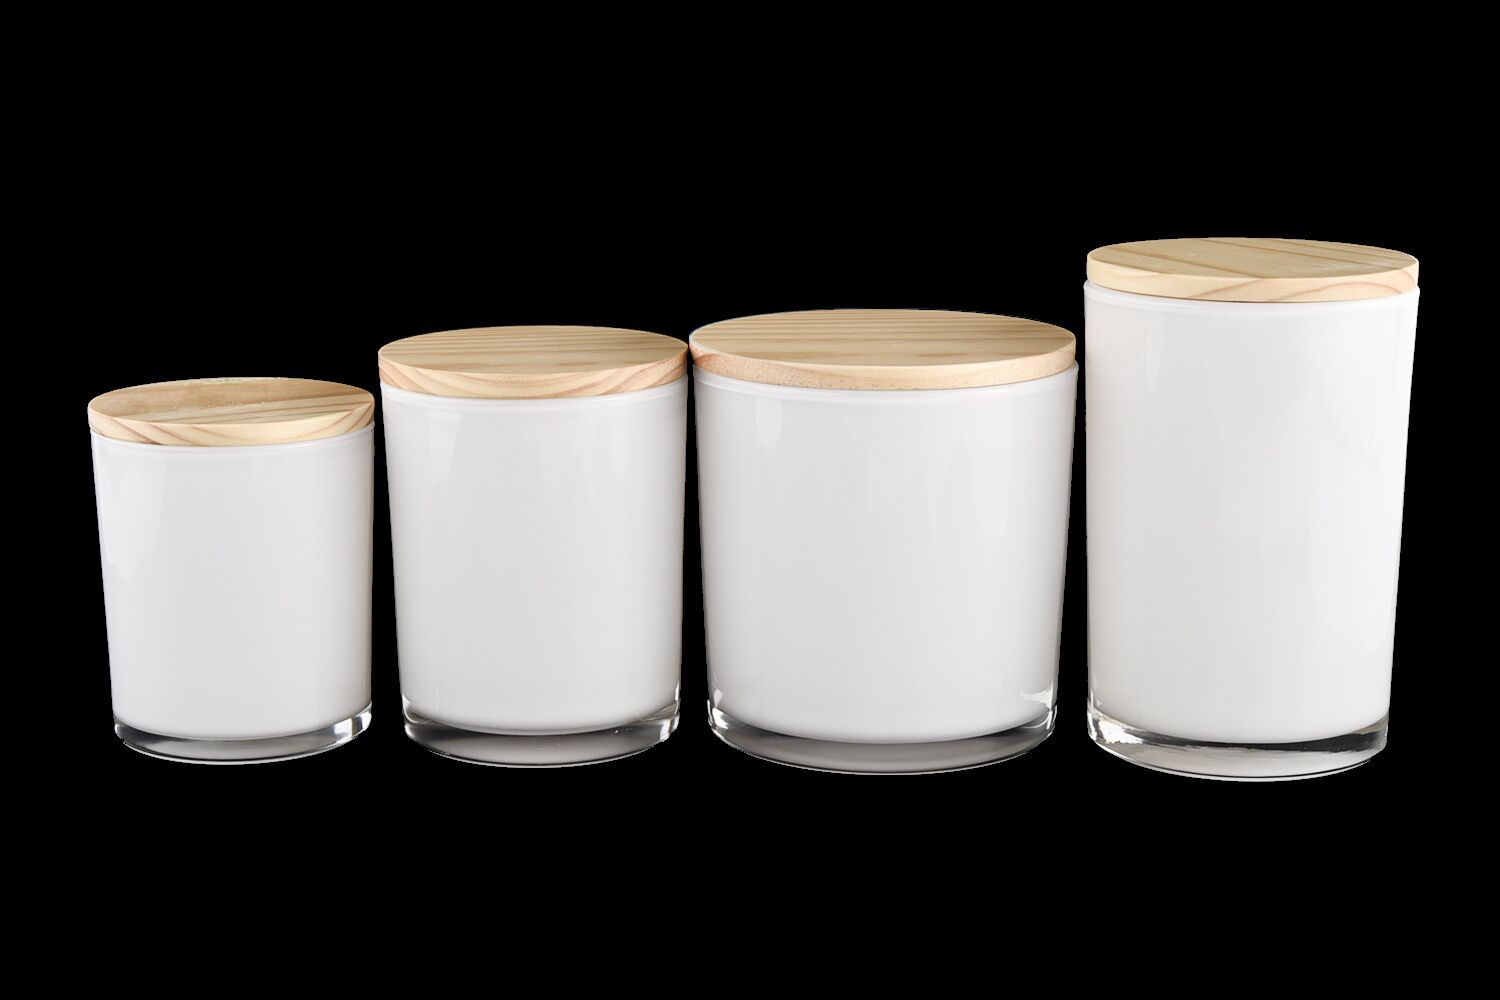 2oz-20oz customized color glass candle jar in bulk 